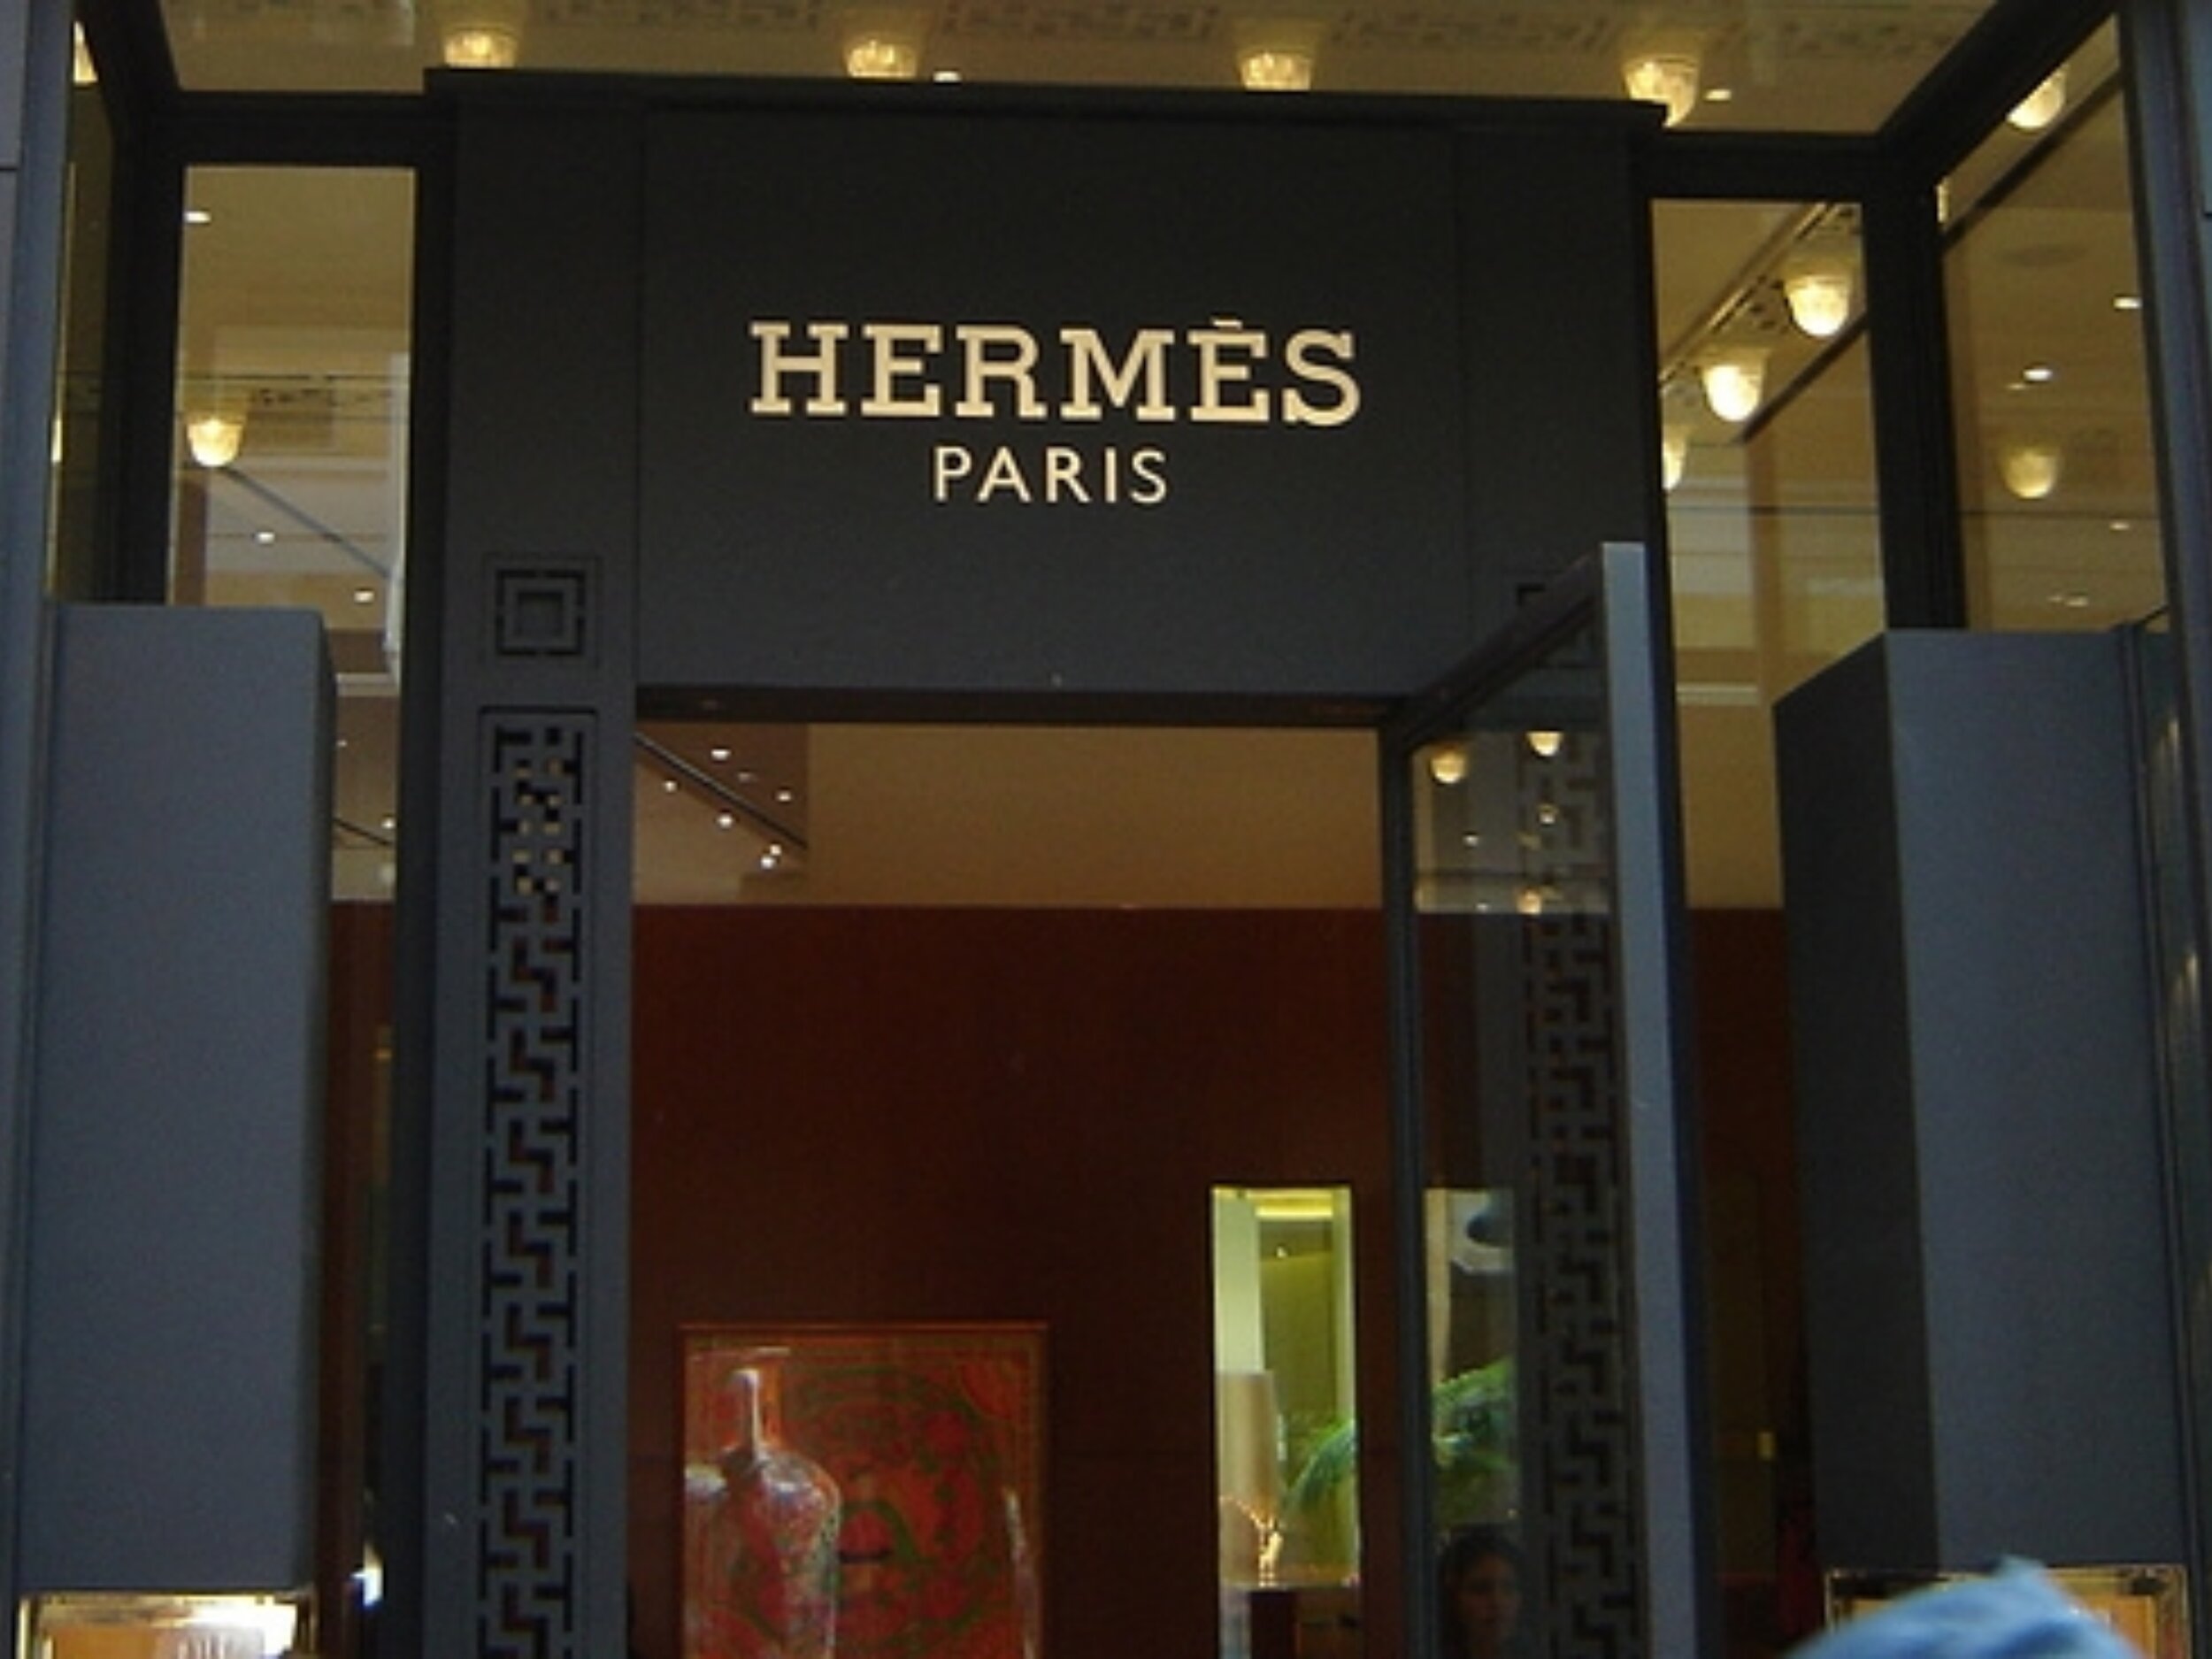 Hermés at the Bellagio